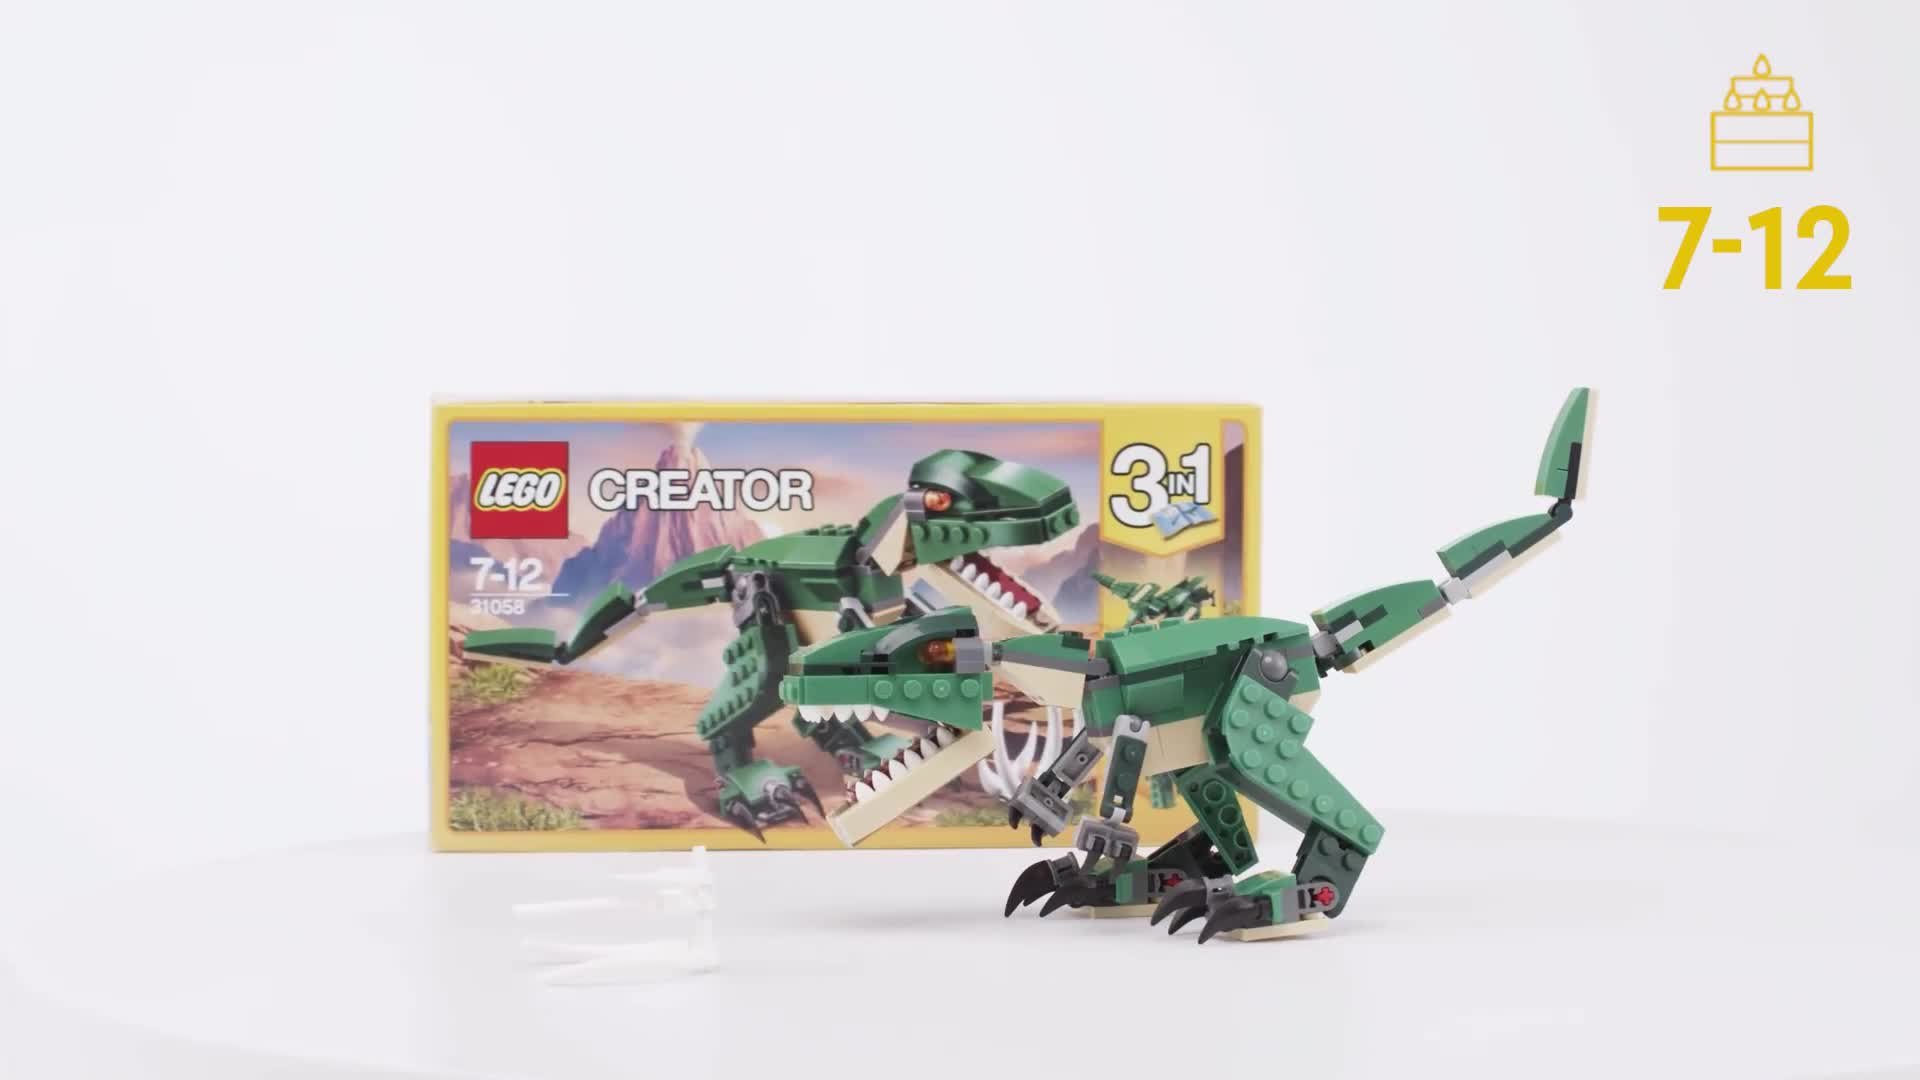 Buy LEGO Creator 3in1 Mighty Dinosaurs Model Building Set 31058, LEGO